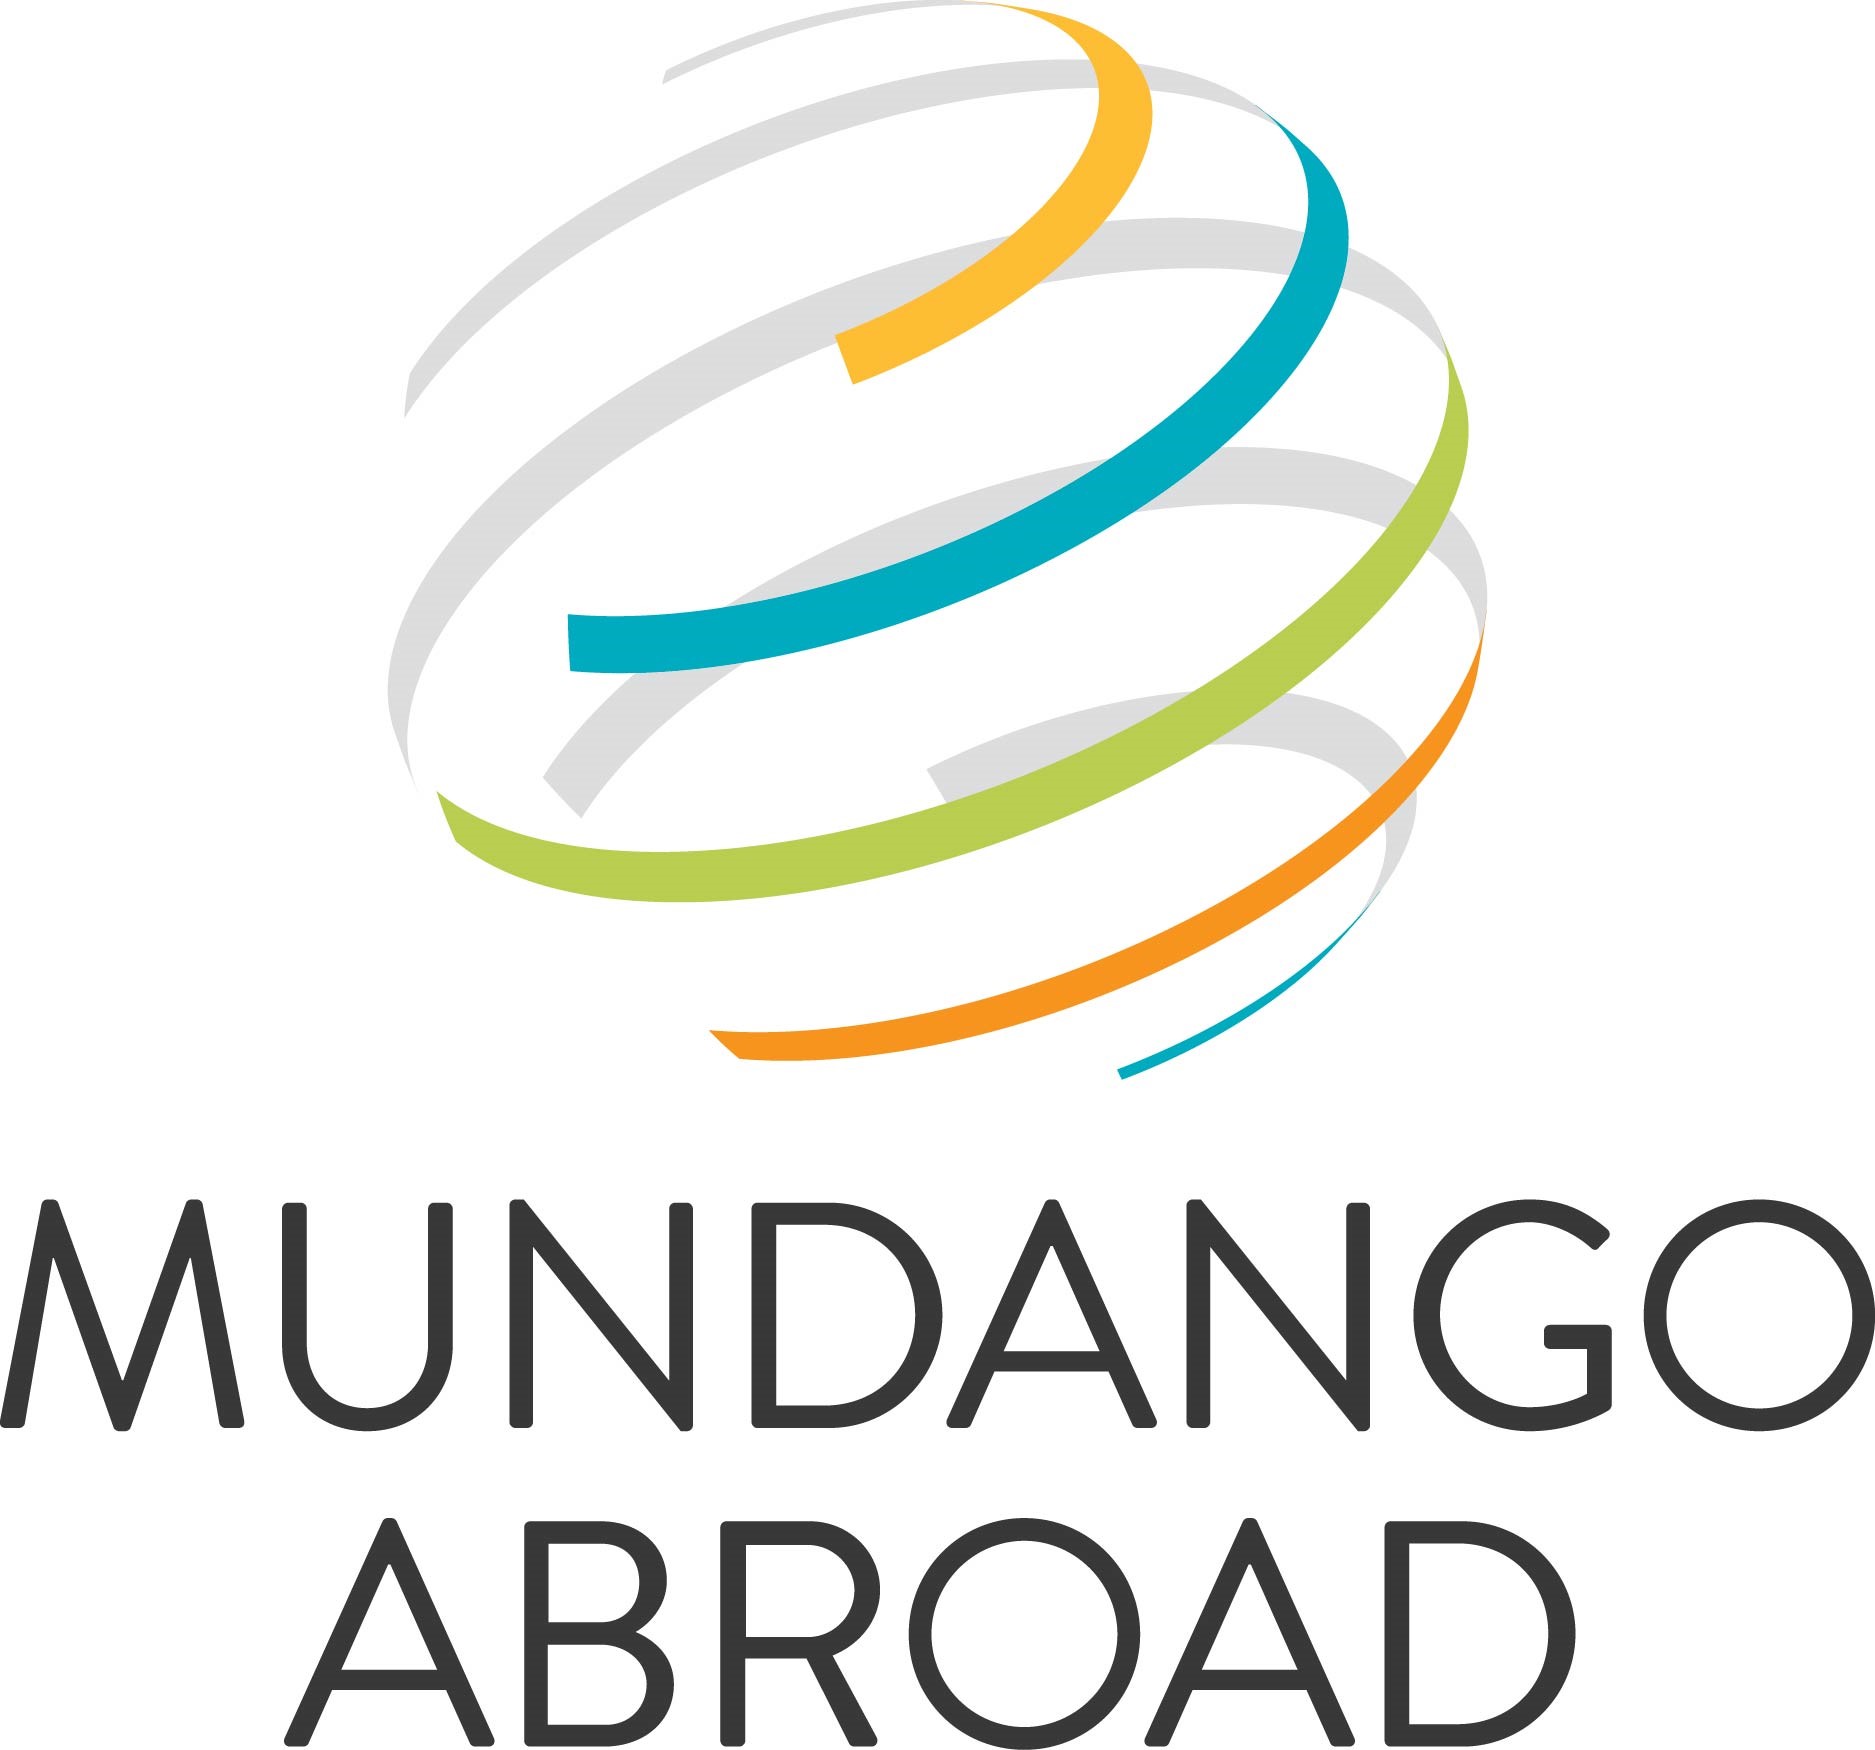 Mundango Abroad Logo.jpg